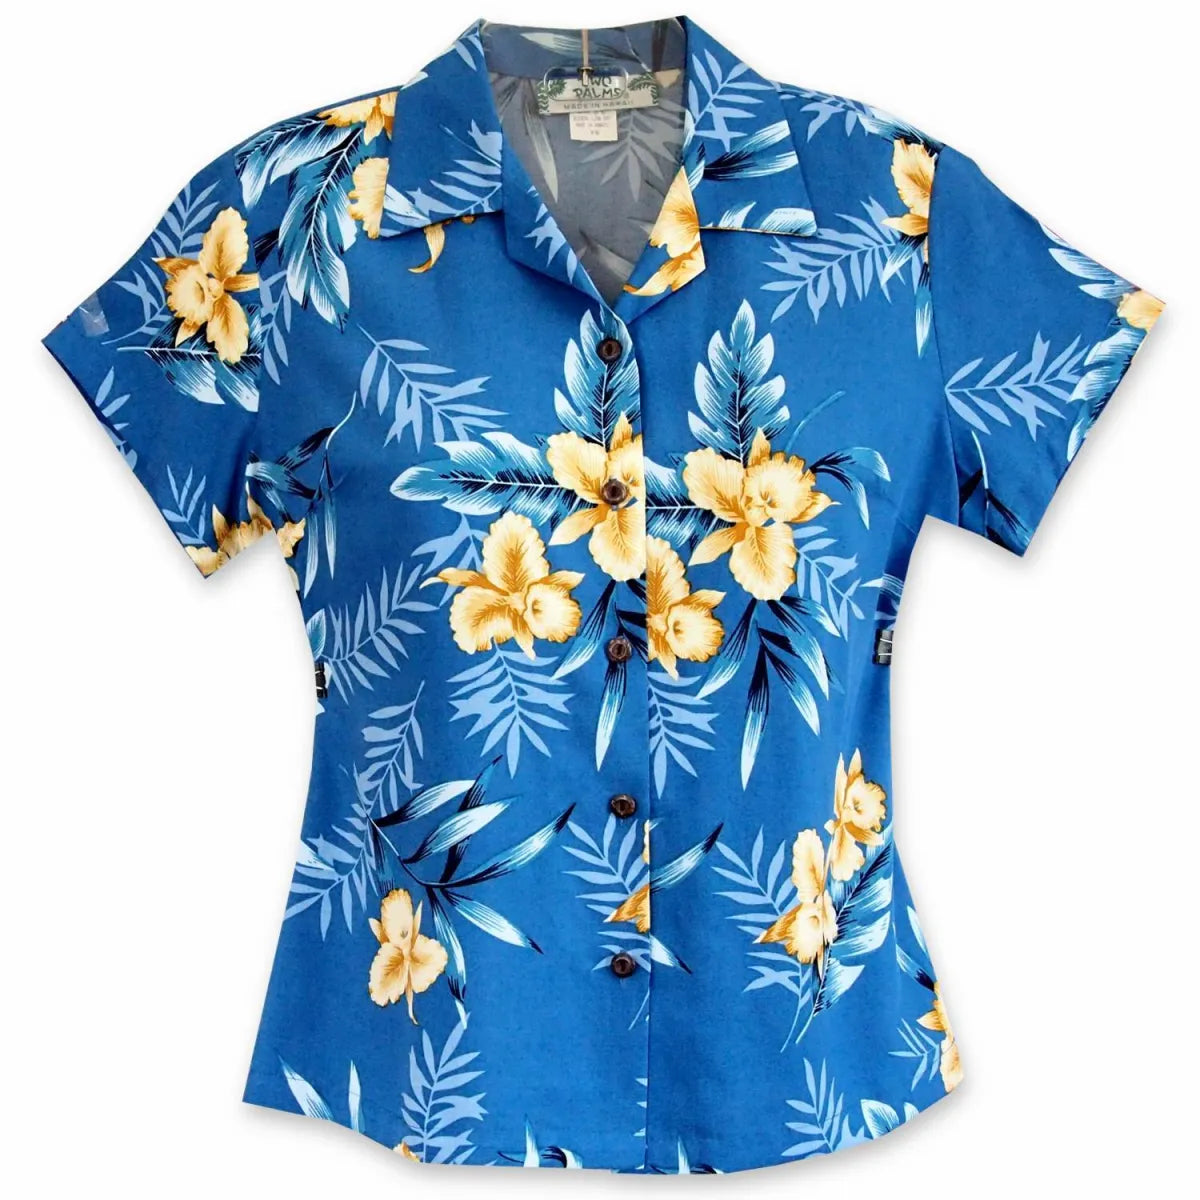 Midnight blue hawaiian lady blouse